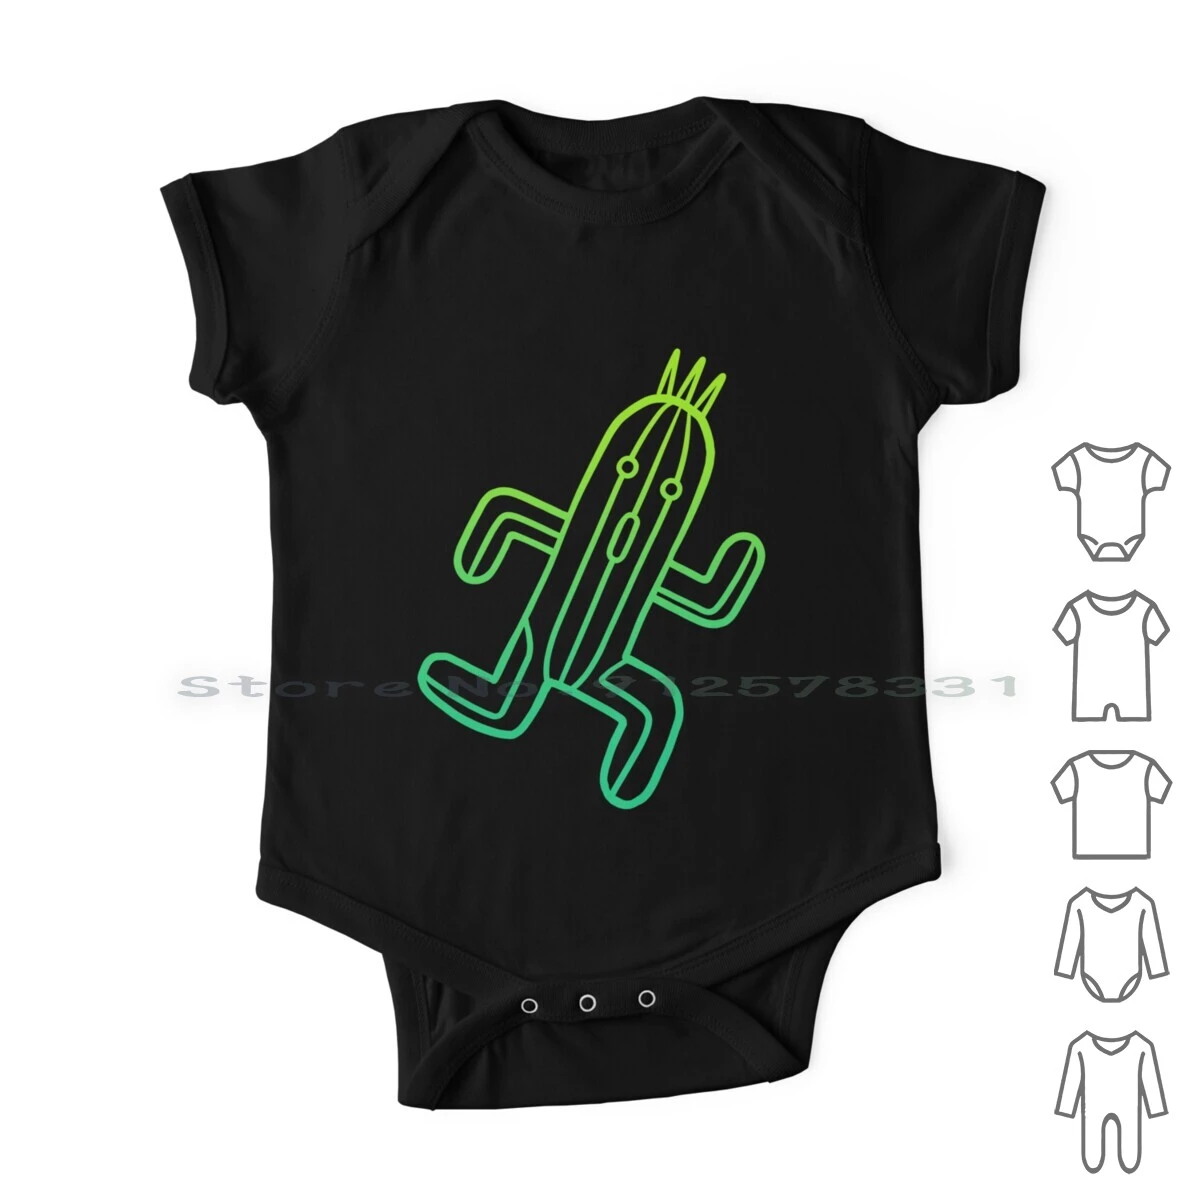 Final para bebé recién nacido, monos de algodón, Cactus verde, neón, videojuegos, Square Enix| | AliExpress